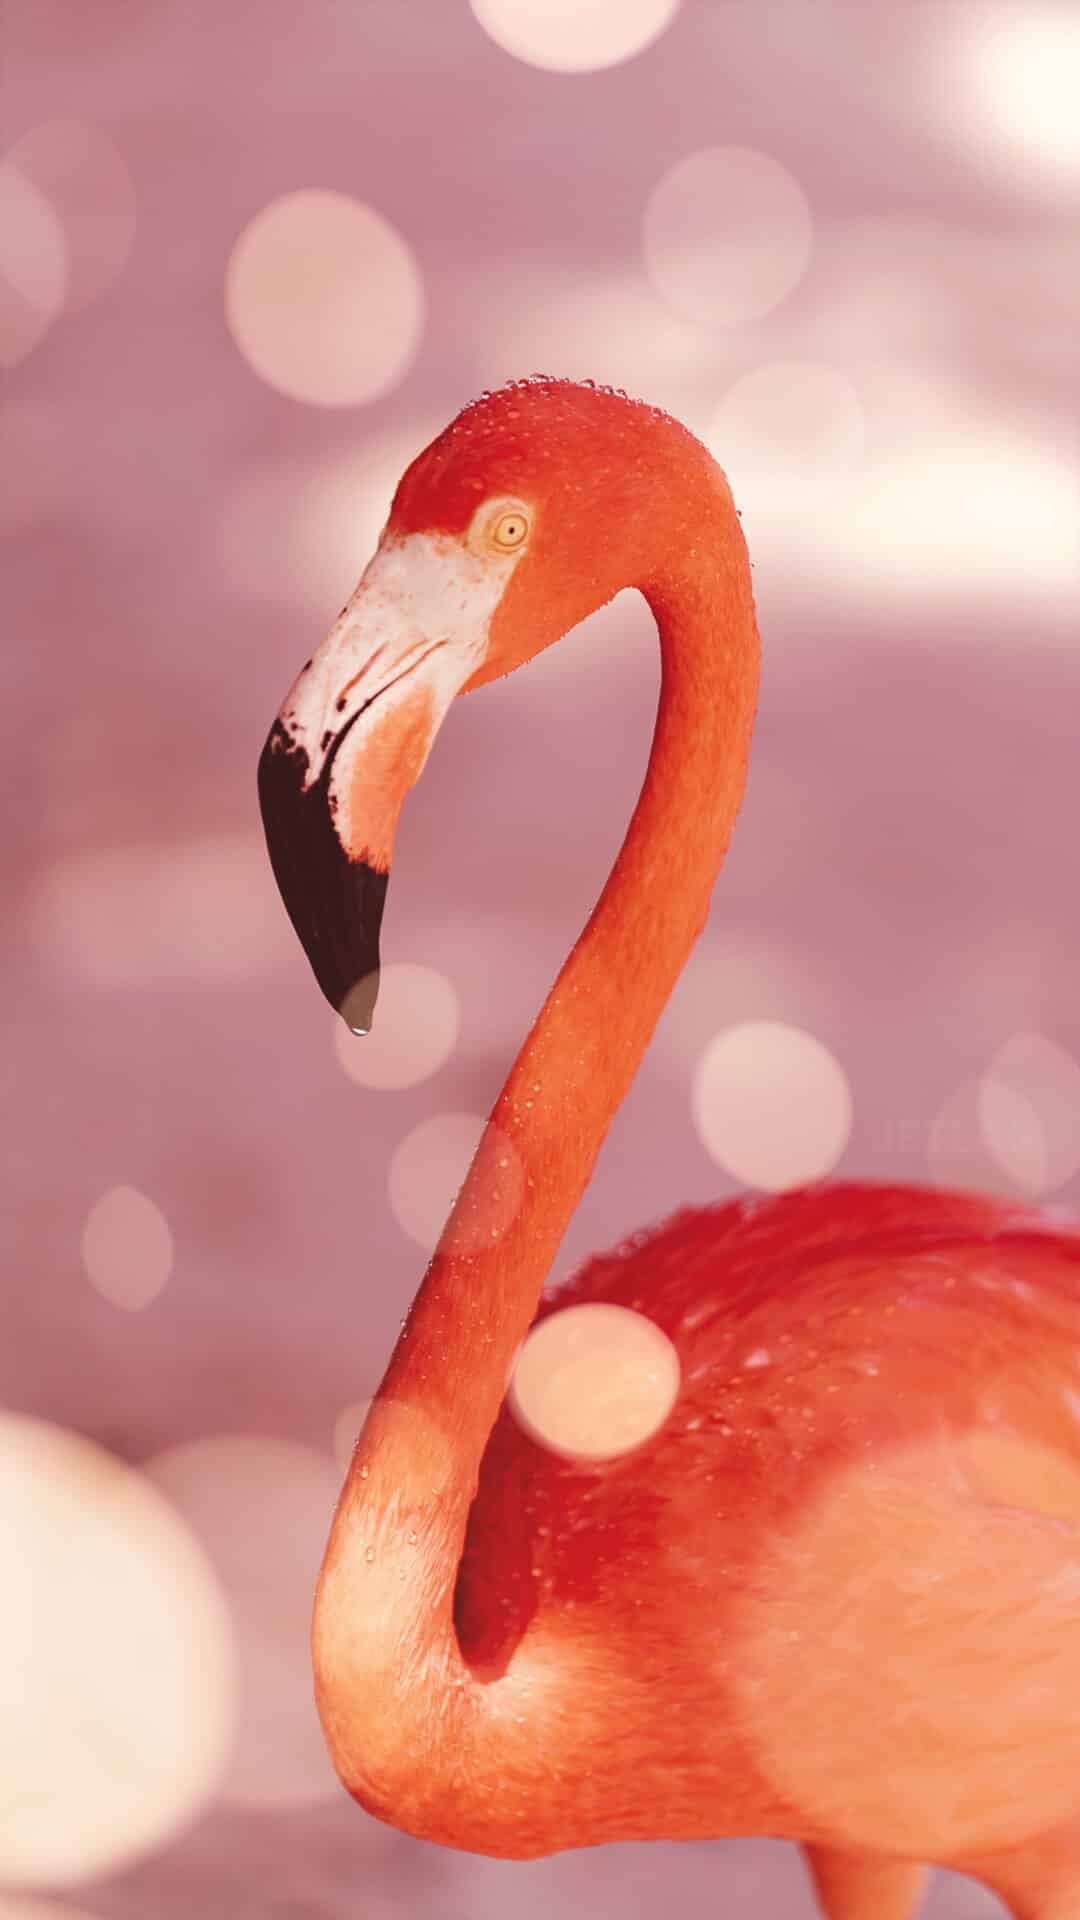 JETLAG-FlamingoShower-1